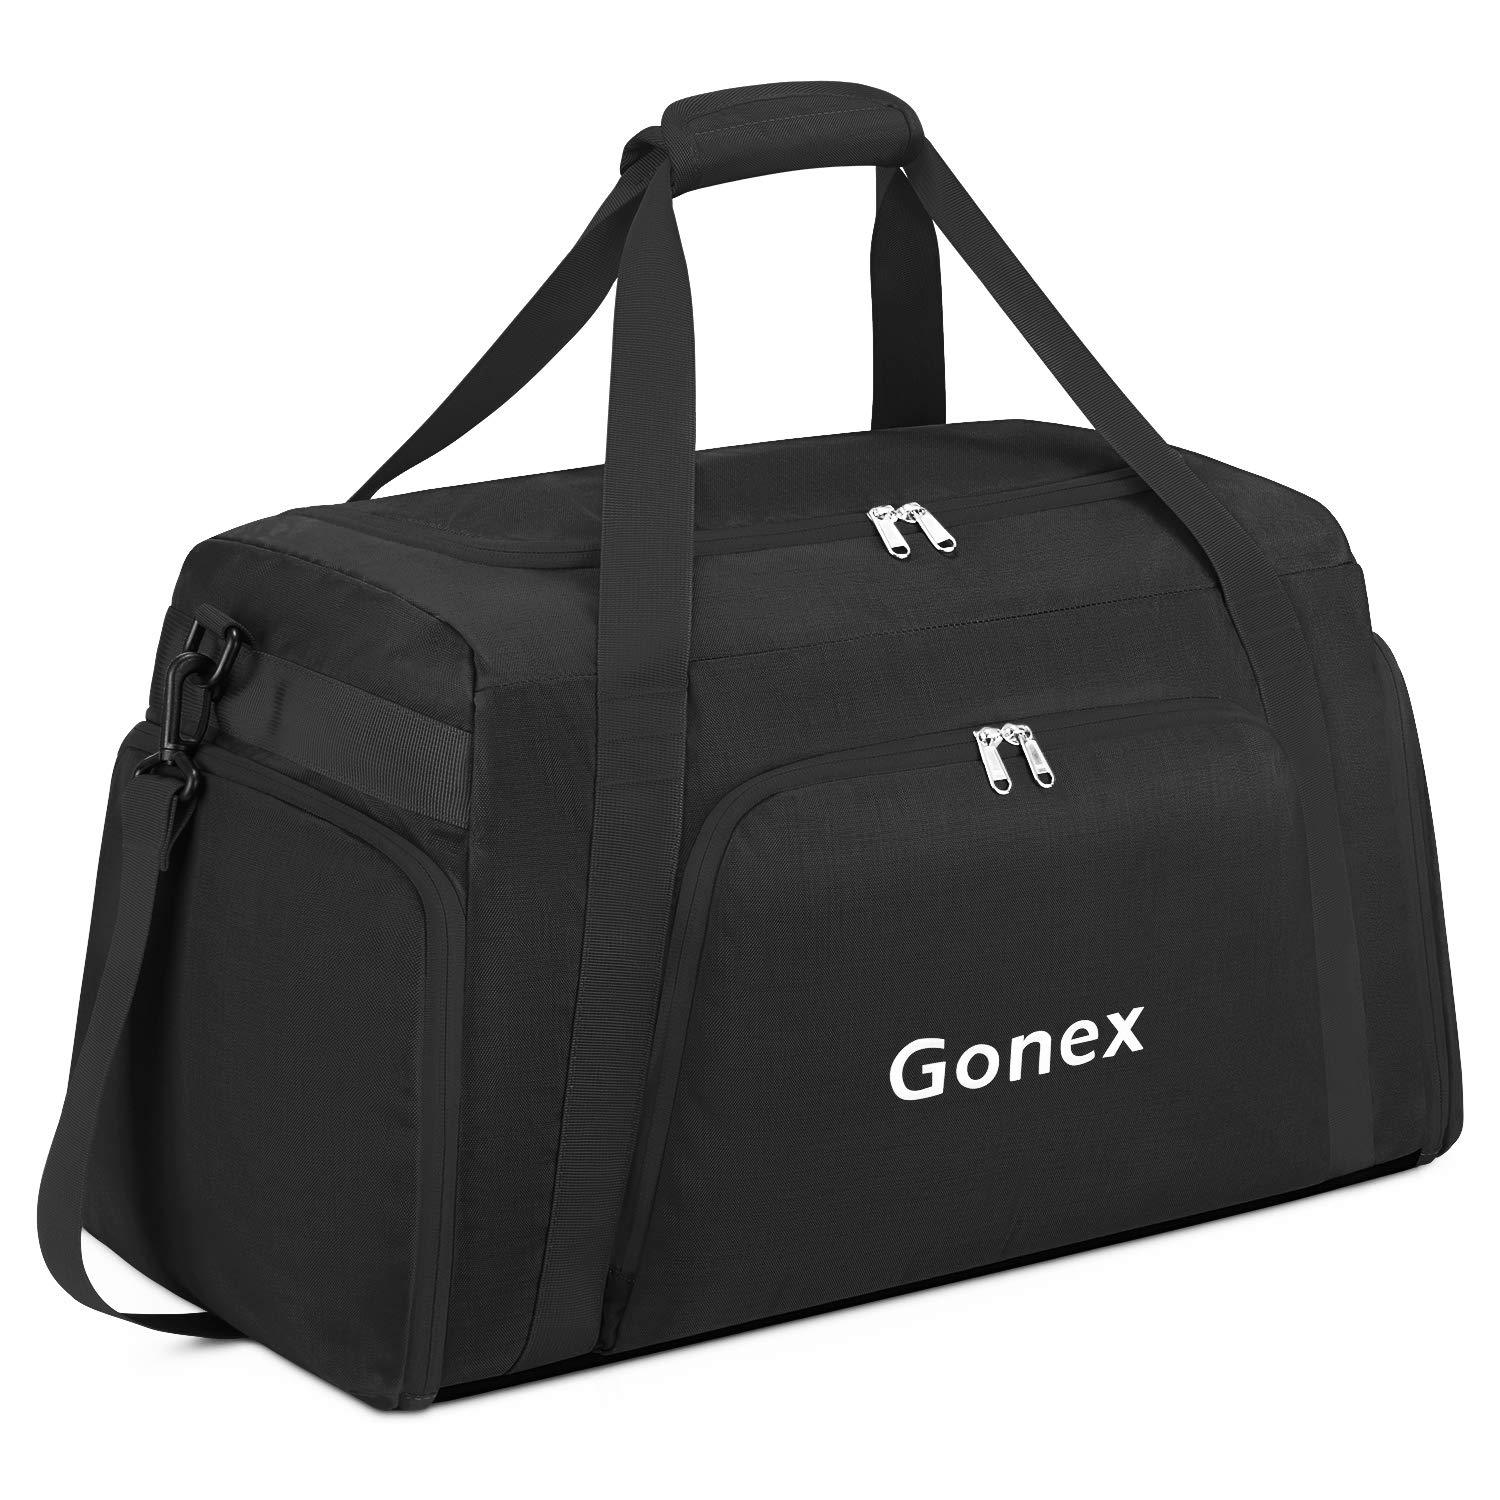 gonex travel duffel bags